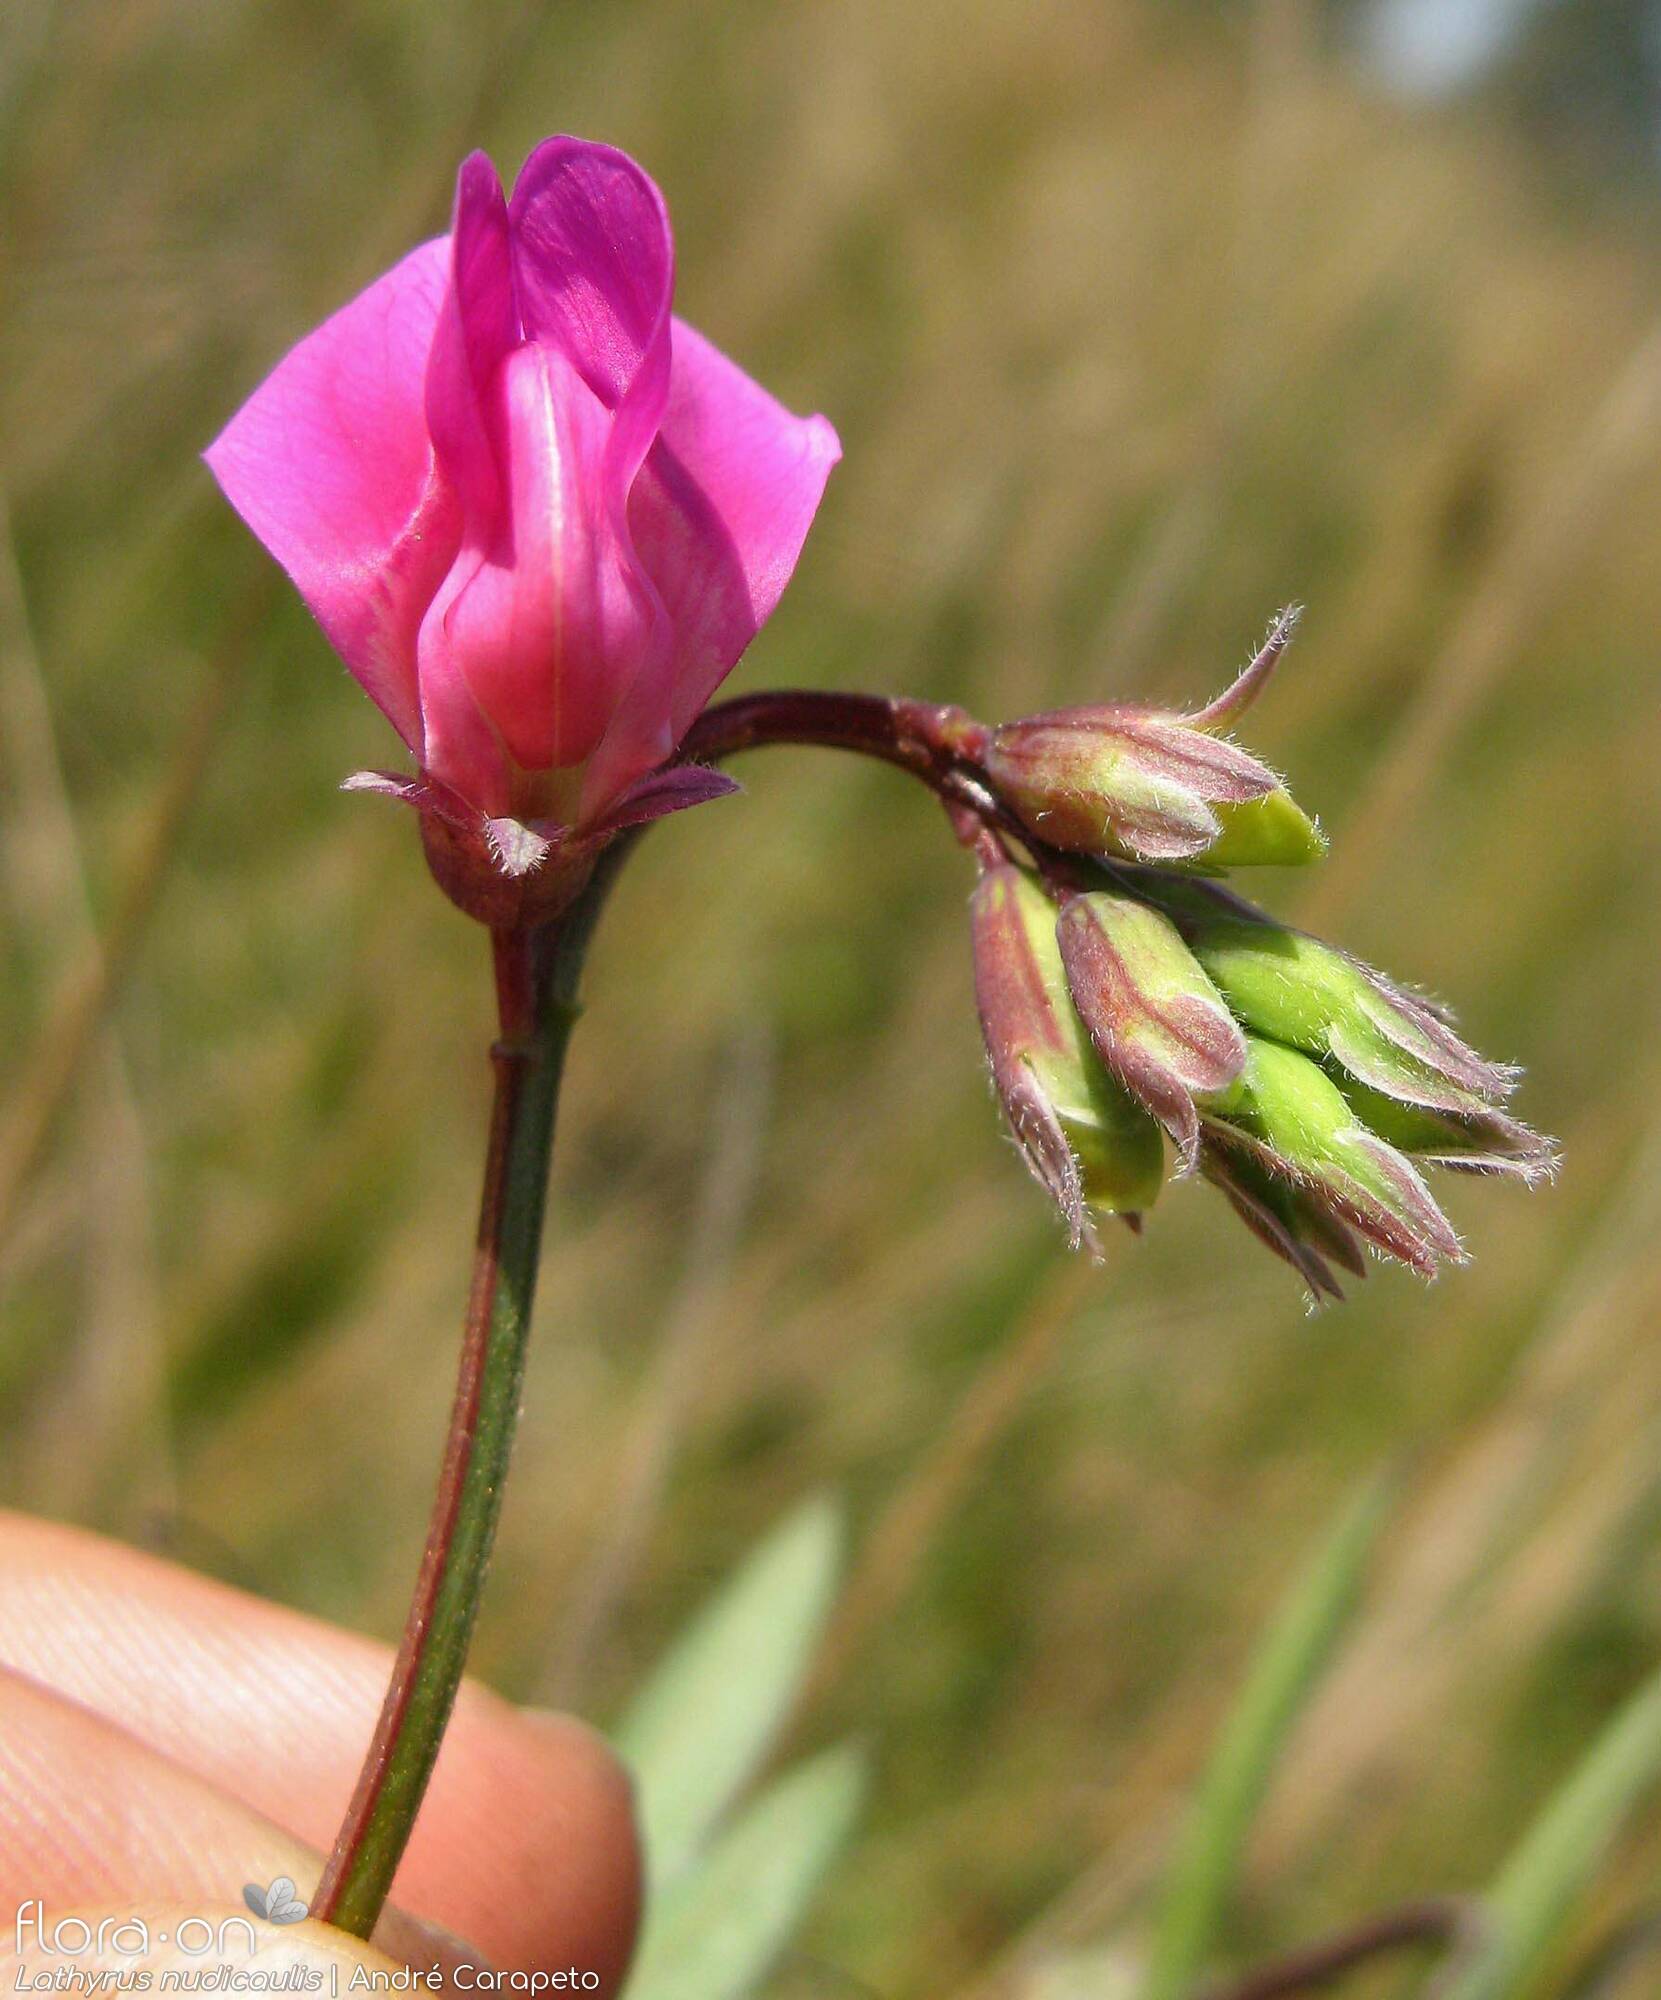 Lathyrus nudicaulis - Flor (close-up) | André Carapeto; CC BY-NC 4.0